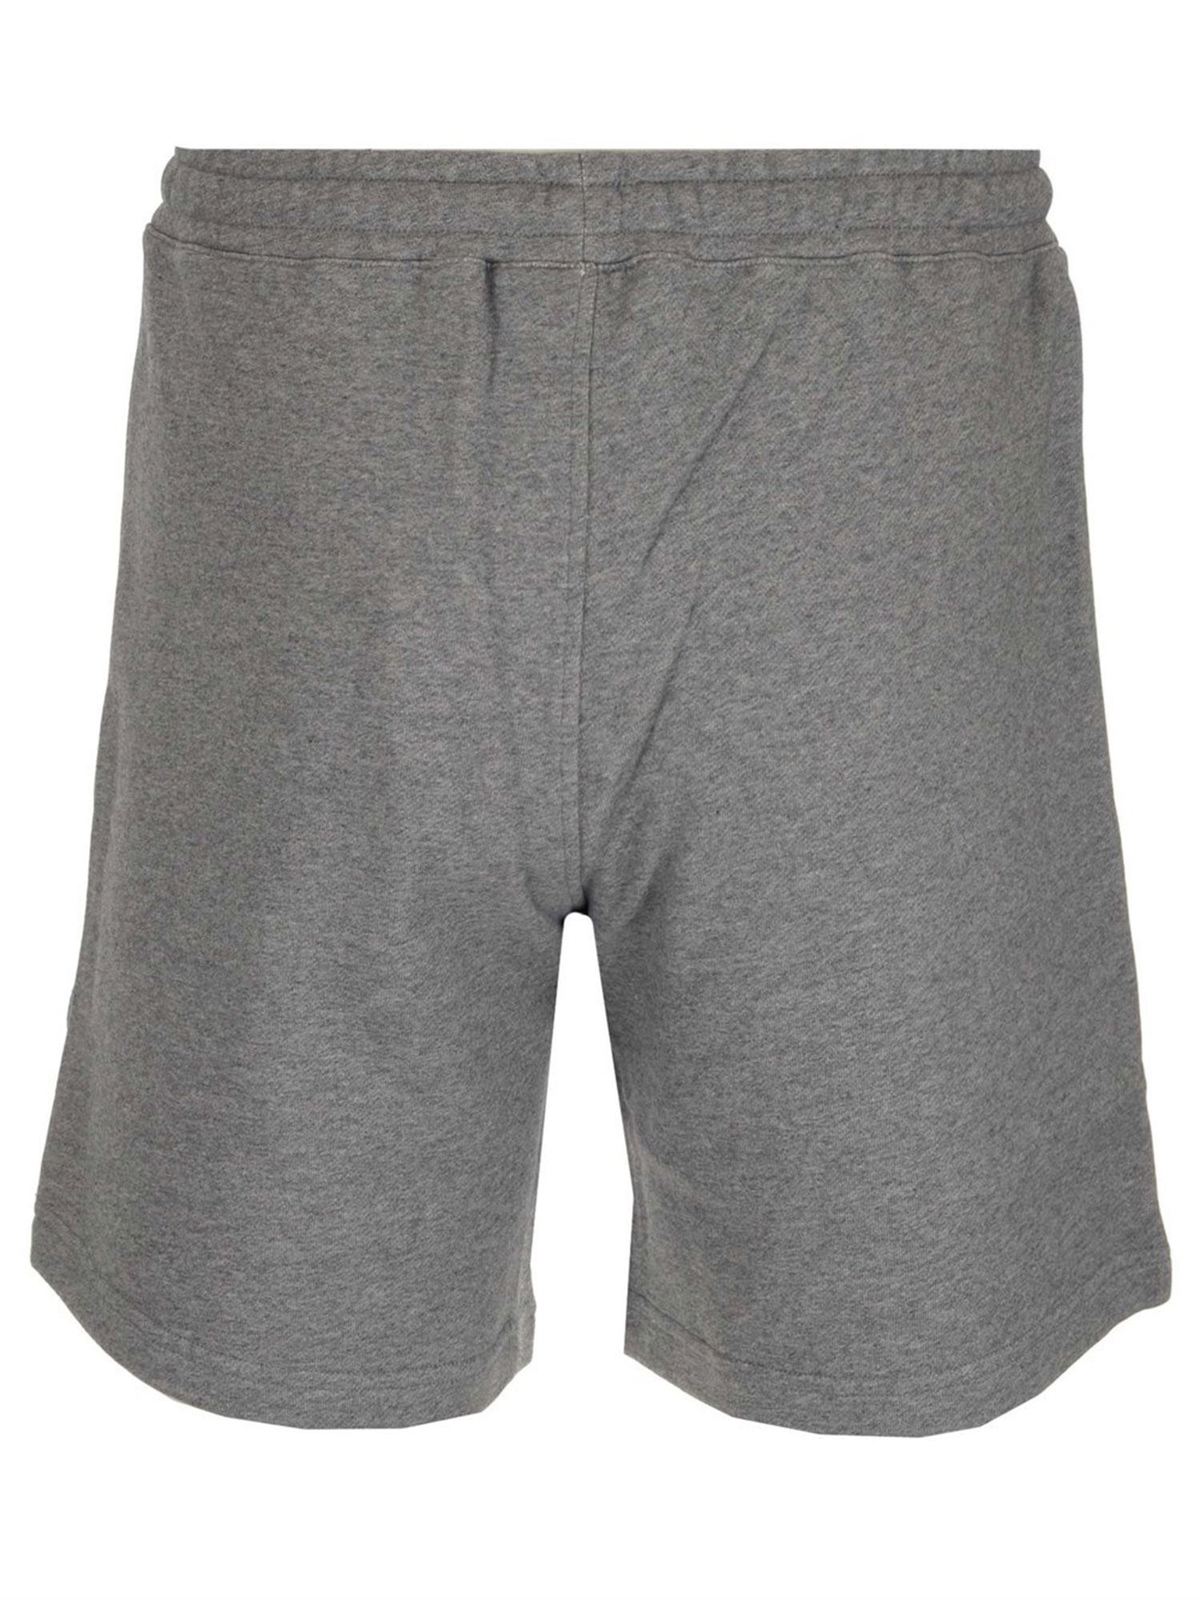 kenzo grey shorts